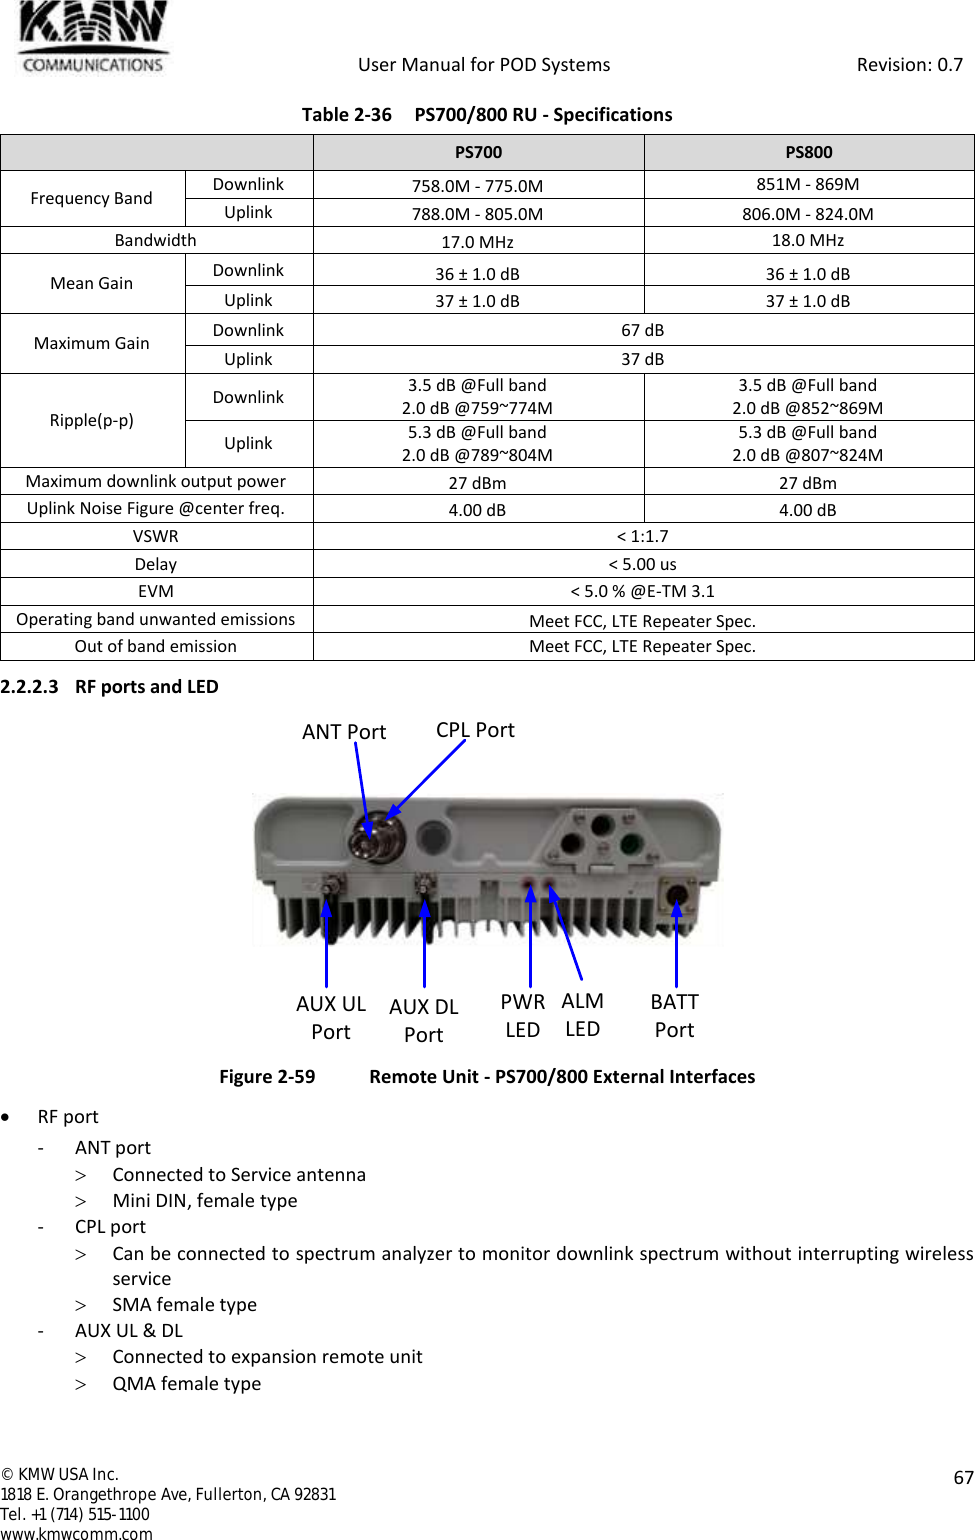            User Manual for POD Systems                                                     Revision: 0.7  ©  KMW USA Inc. 1818 E. Orangethrope Ave, Fullerton, CA 92831 Tel. +1 (714) 515-1100 www.kmwcomm.com  67  Table 2-36  PS700/800 RU - Specifications  PS700 PS800 Frequency Band Downlink 758.0M - 775.0M 851M - 869M Uplink 788.0M - 805.0M 806.0M - 824.0M Bandwidth 17.0 MHz 18.0 MHz Mean Gain Downlink 36 ± 1.0 dB 36 ± 1.0 dB Uplink 37 ± 1.0 dB 37 ± 1.0 dB Maximum Gain Downlink 67 dB Uplink 37 dB Ripple(p-p) Downlink 3.5 dB @Full band 2.0 dB @759~774M 3.5 dB @Full band 2.0 dB @852~869M Uplink 5.3 dB @Full band 2.0 dB @789~804M 5.3 dB @Full band 2.0 dB @807~824M Maximum downlink output power 27 dBm 27 dBm Uplink Noise Figure @center freq. 4.00 dB 4.00 dB VSWR &lt; 1:1.7 Delay &lt; 5.00 us EVM &lt; 5.0 % @E-TM 3.1 Operating band unwanted emissions Meet FCC, LTE Repeater Spec. Out of band emission Meet FCC, LTE Repeater Spec. 2.2.2.3 RF ports and LED  Figure 2-59  Remote Unit - PS700/800 External Interfaces  RF port - ANT port  Connected to Service antenna  Mini DIN, female type - CPL port  Can be connected to spectrum analyzer to monitor downlink spectrum without interrupting wireless service  SMA female type - AUX UL &amp; DL  Connected to expansion remote unit  QMA female type AUX ULPortAUX DLPortALMLEDPWRLEDBATTPortANT Port CPL Port